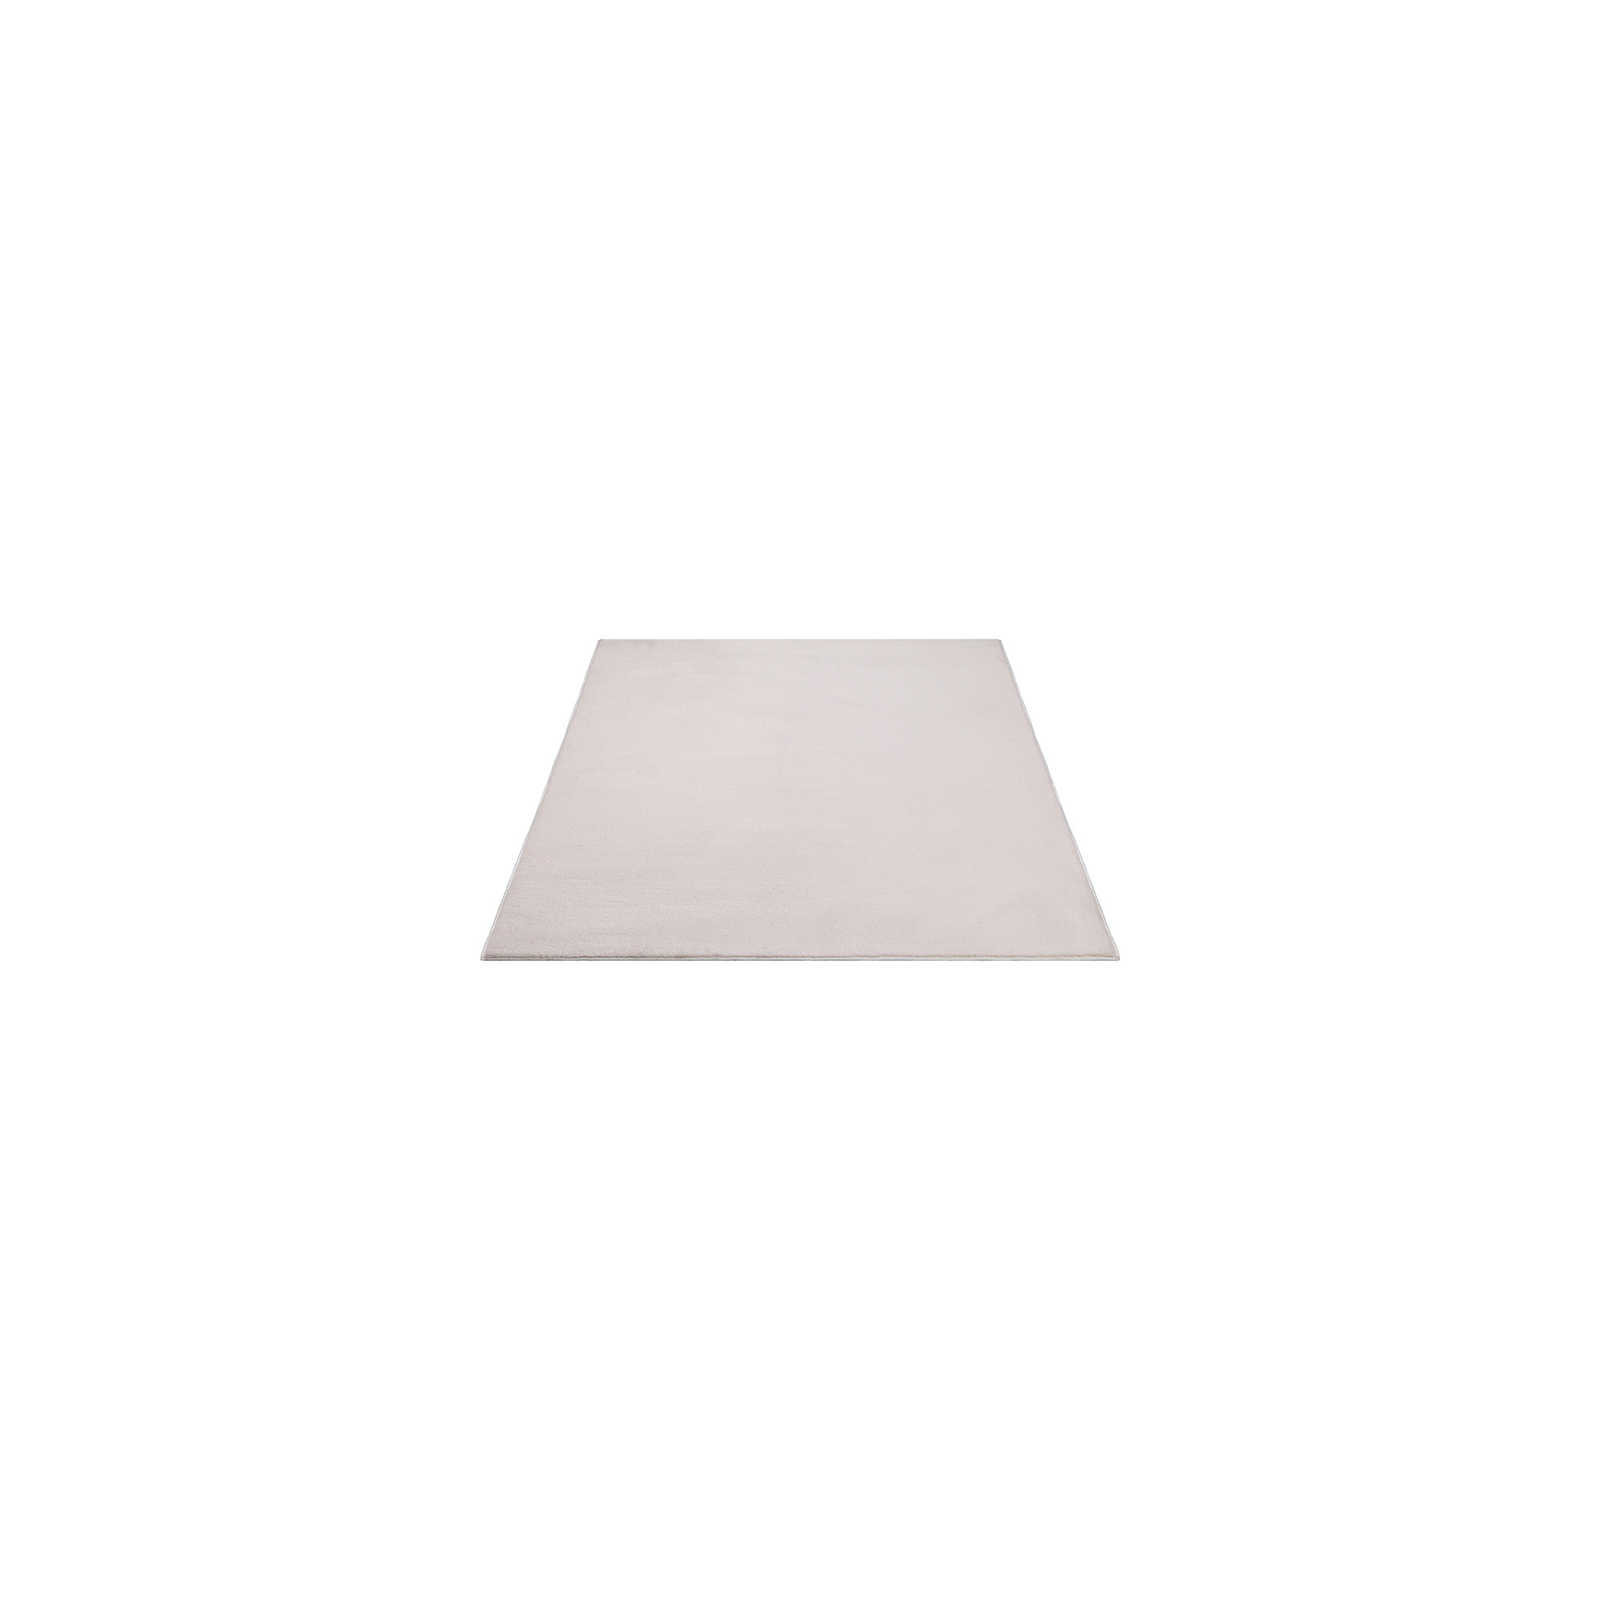 Plain high pile carpet in soft beige - 140 x 70 cm
